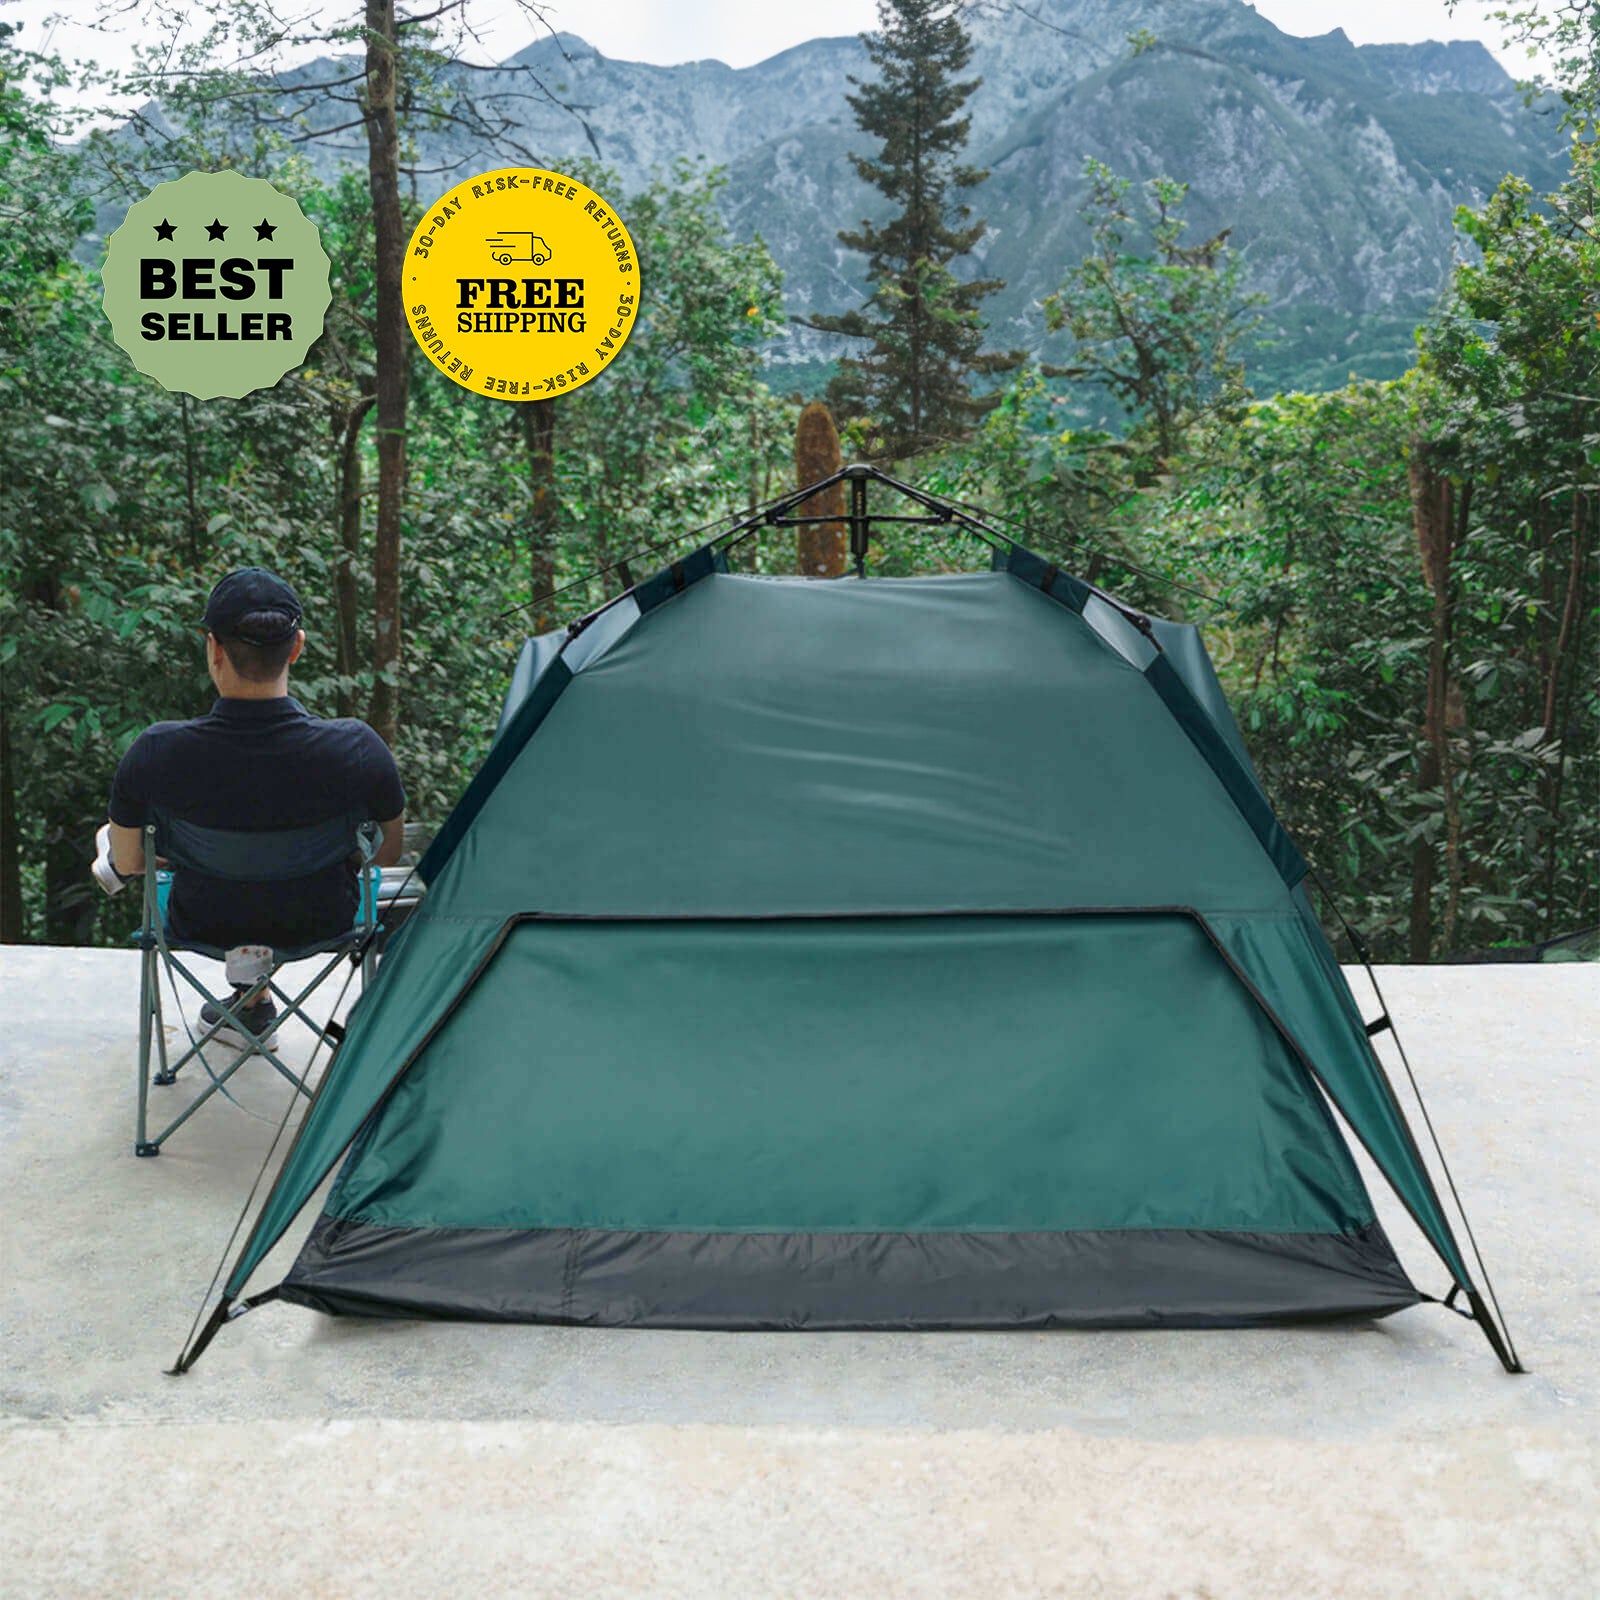 Calmcrest™ 3 Secs Tent - The #1 Easiest & Fastest Setup